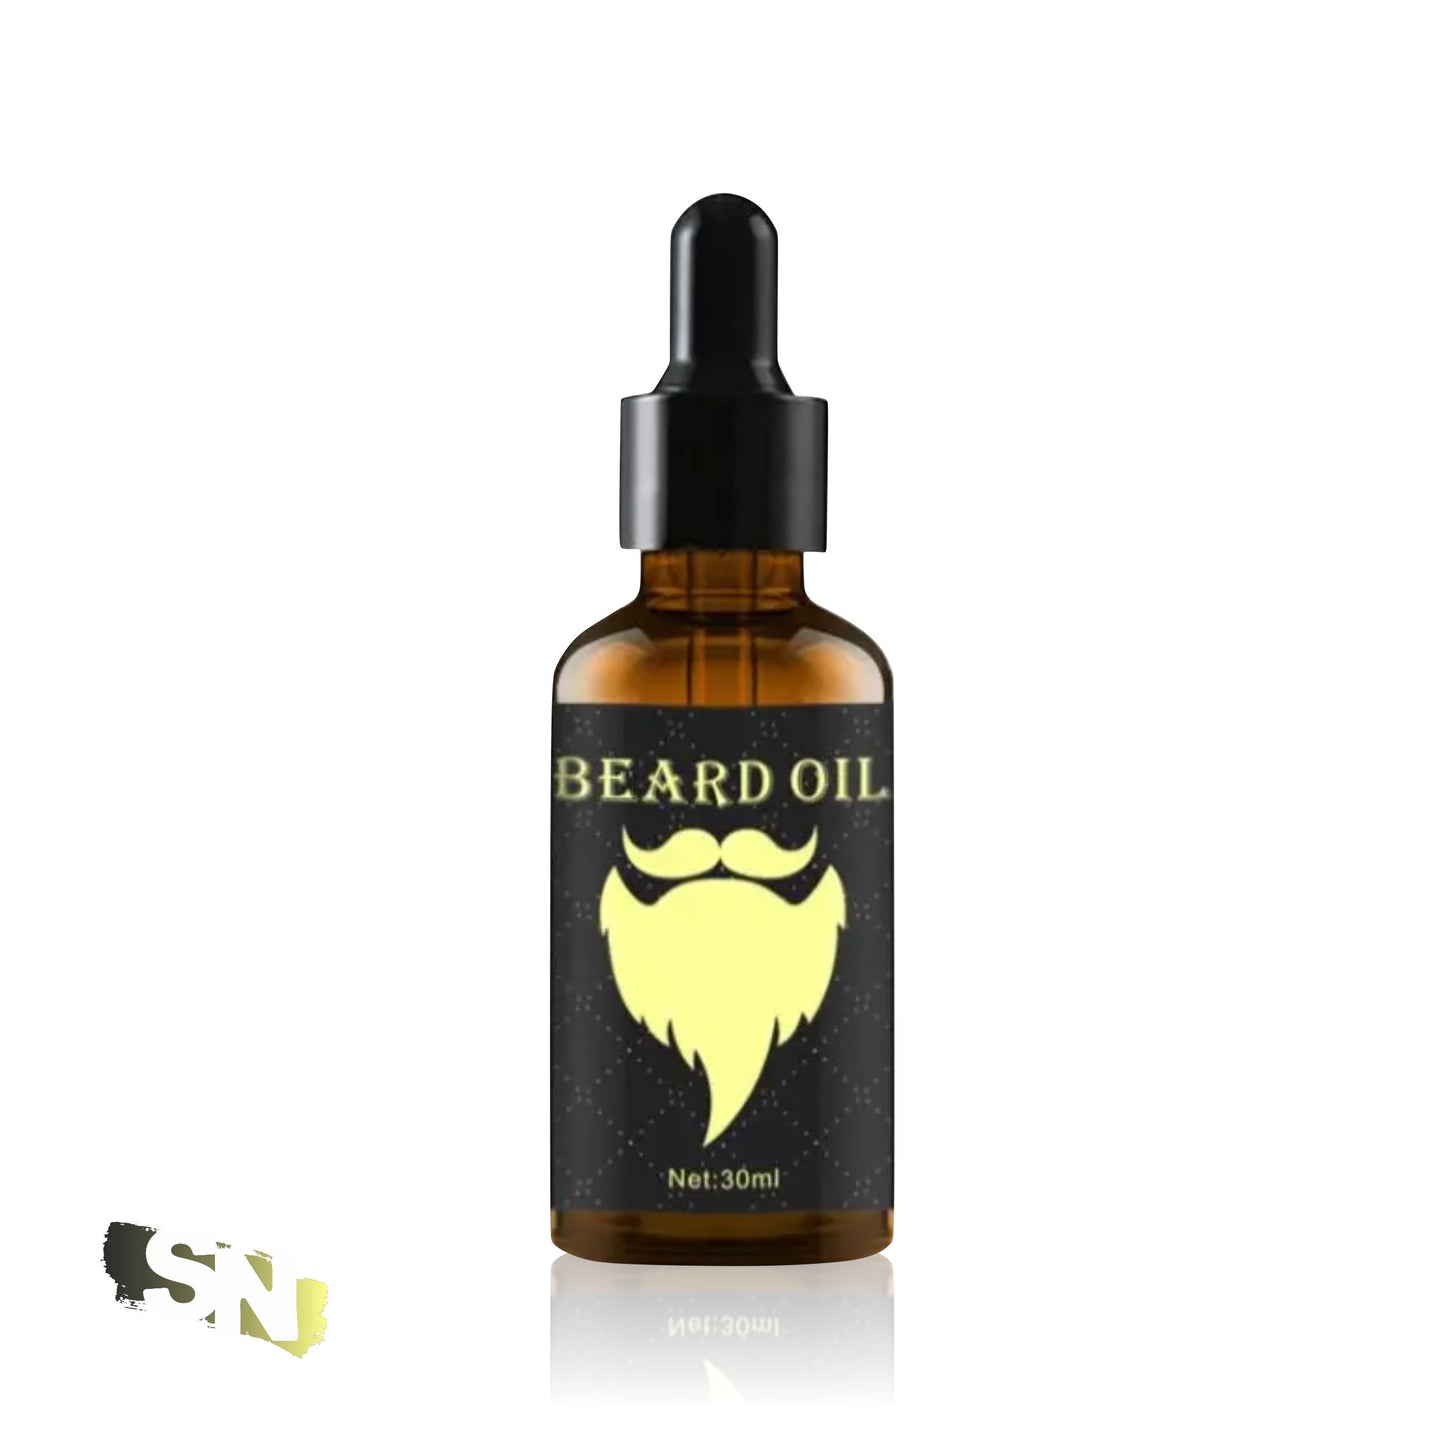 Natural Beard Oil | 30ml